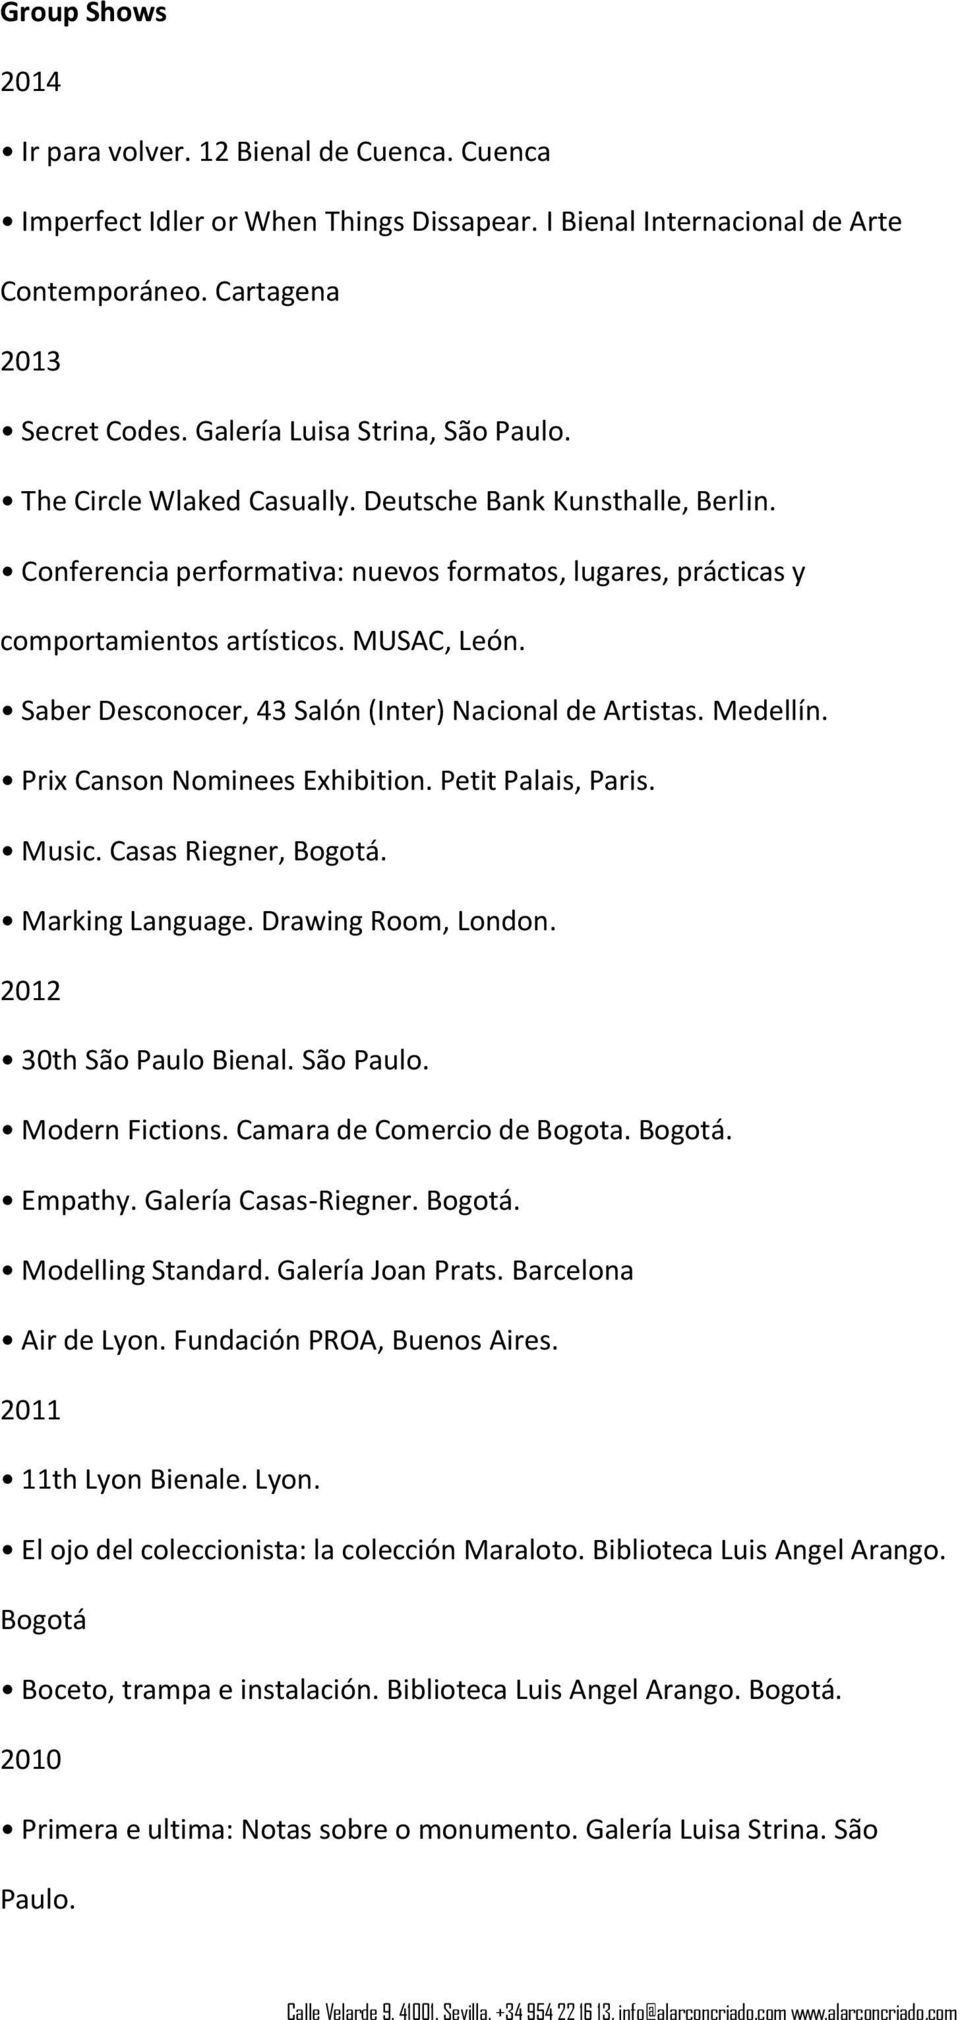 Saber Desconocer, 43 Salón (Inter) Nacional de Artistas. Medellín. Prix Canson Nominees Exhibition. Petit Palais, Paris. Music. Casas Riegner, Bogotá. Marking Language. Drawing Room, London.